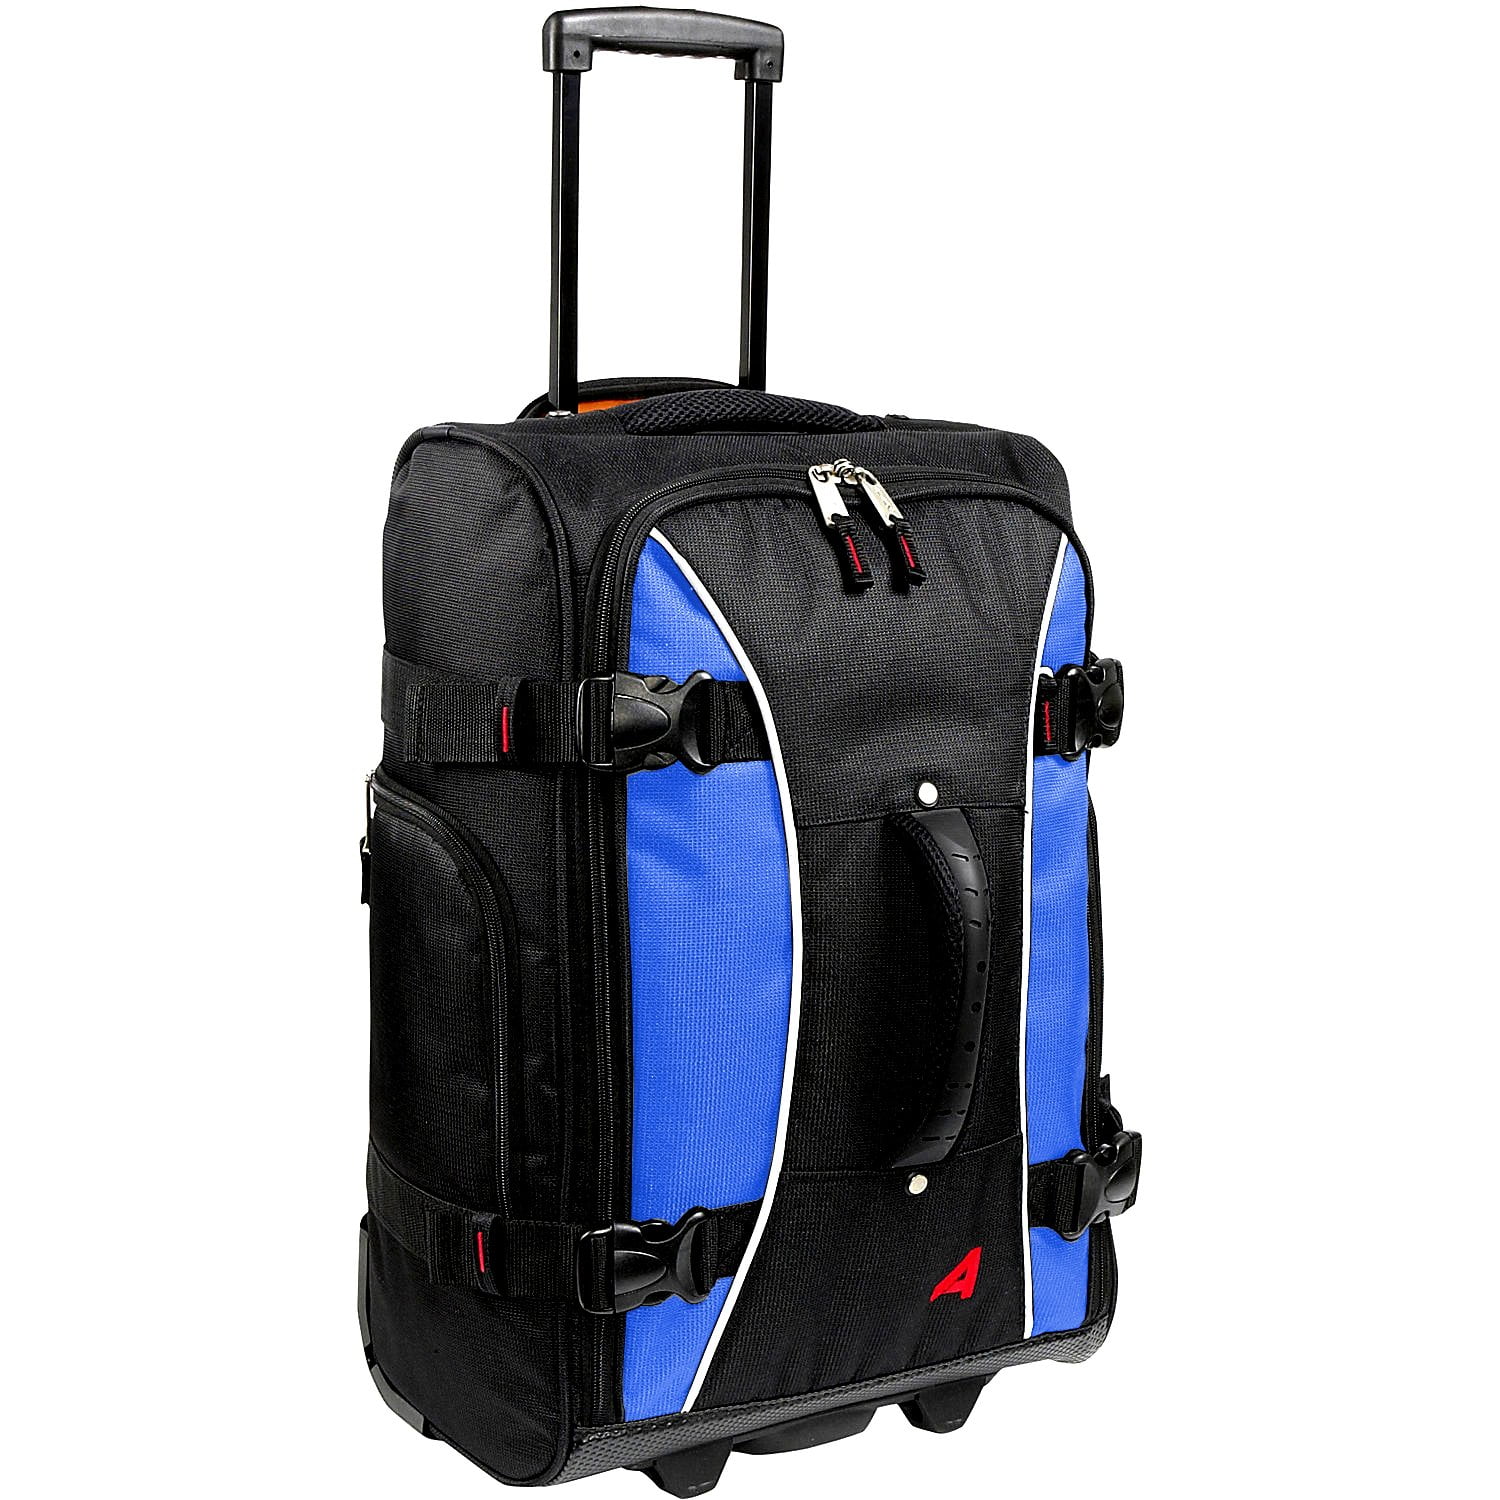 Athalon Luggage 21 Inch Hybrid Travelers Bag (Sea Blue/Black) - Walmart.com